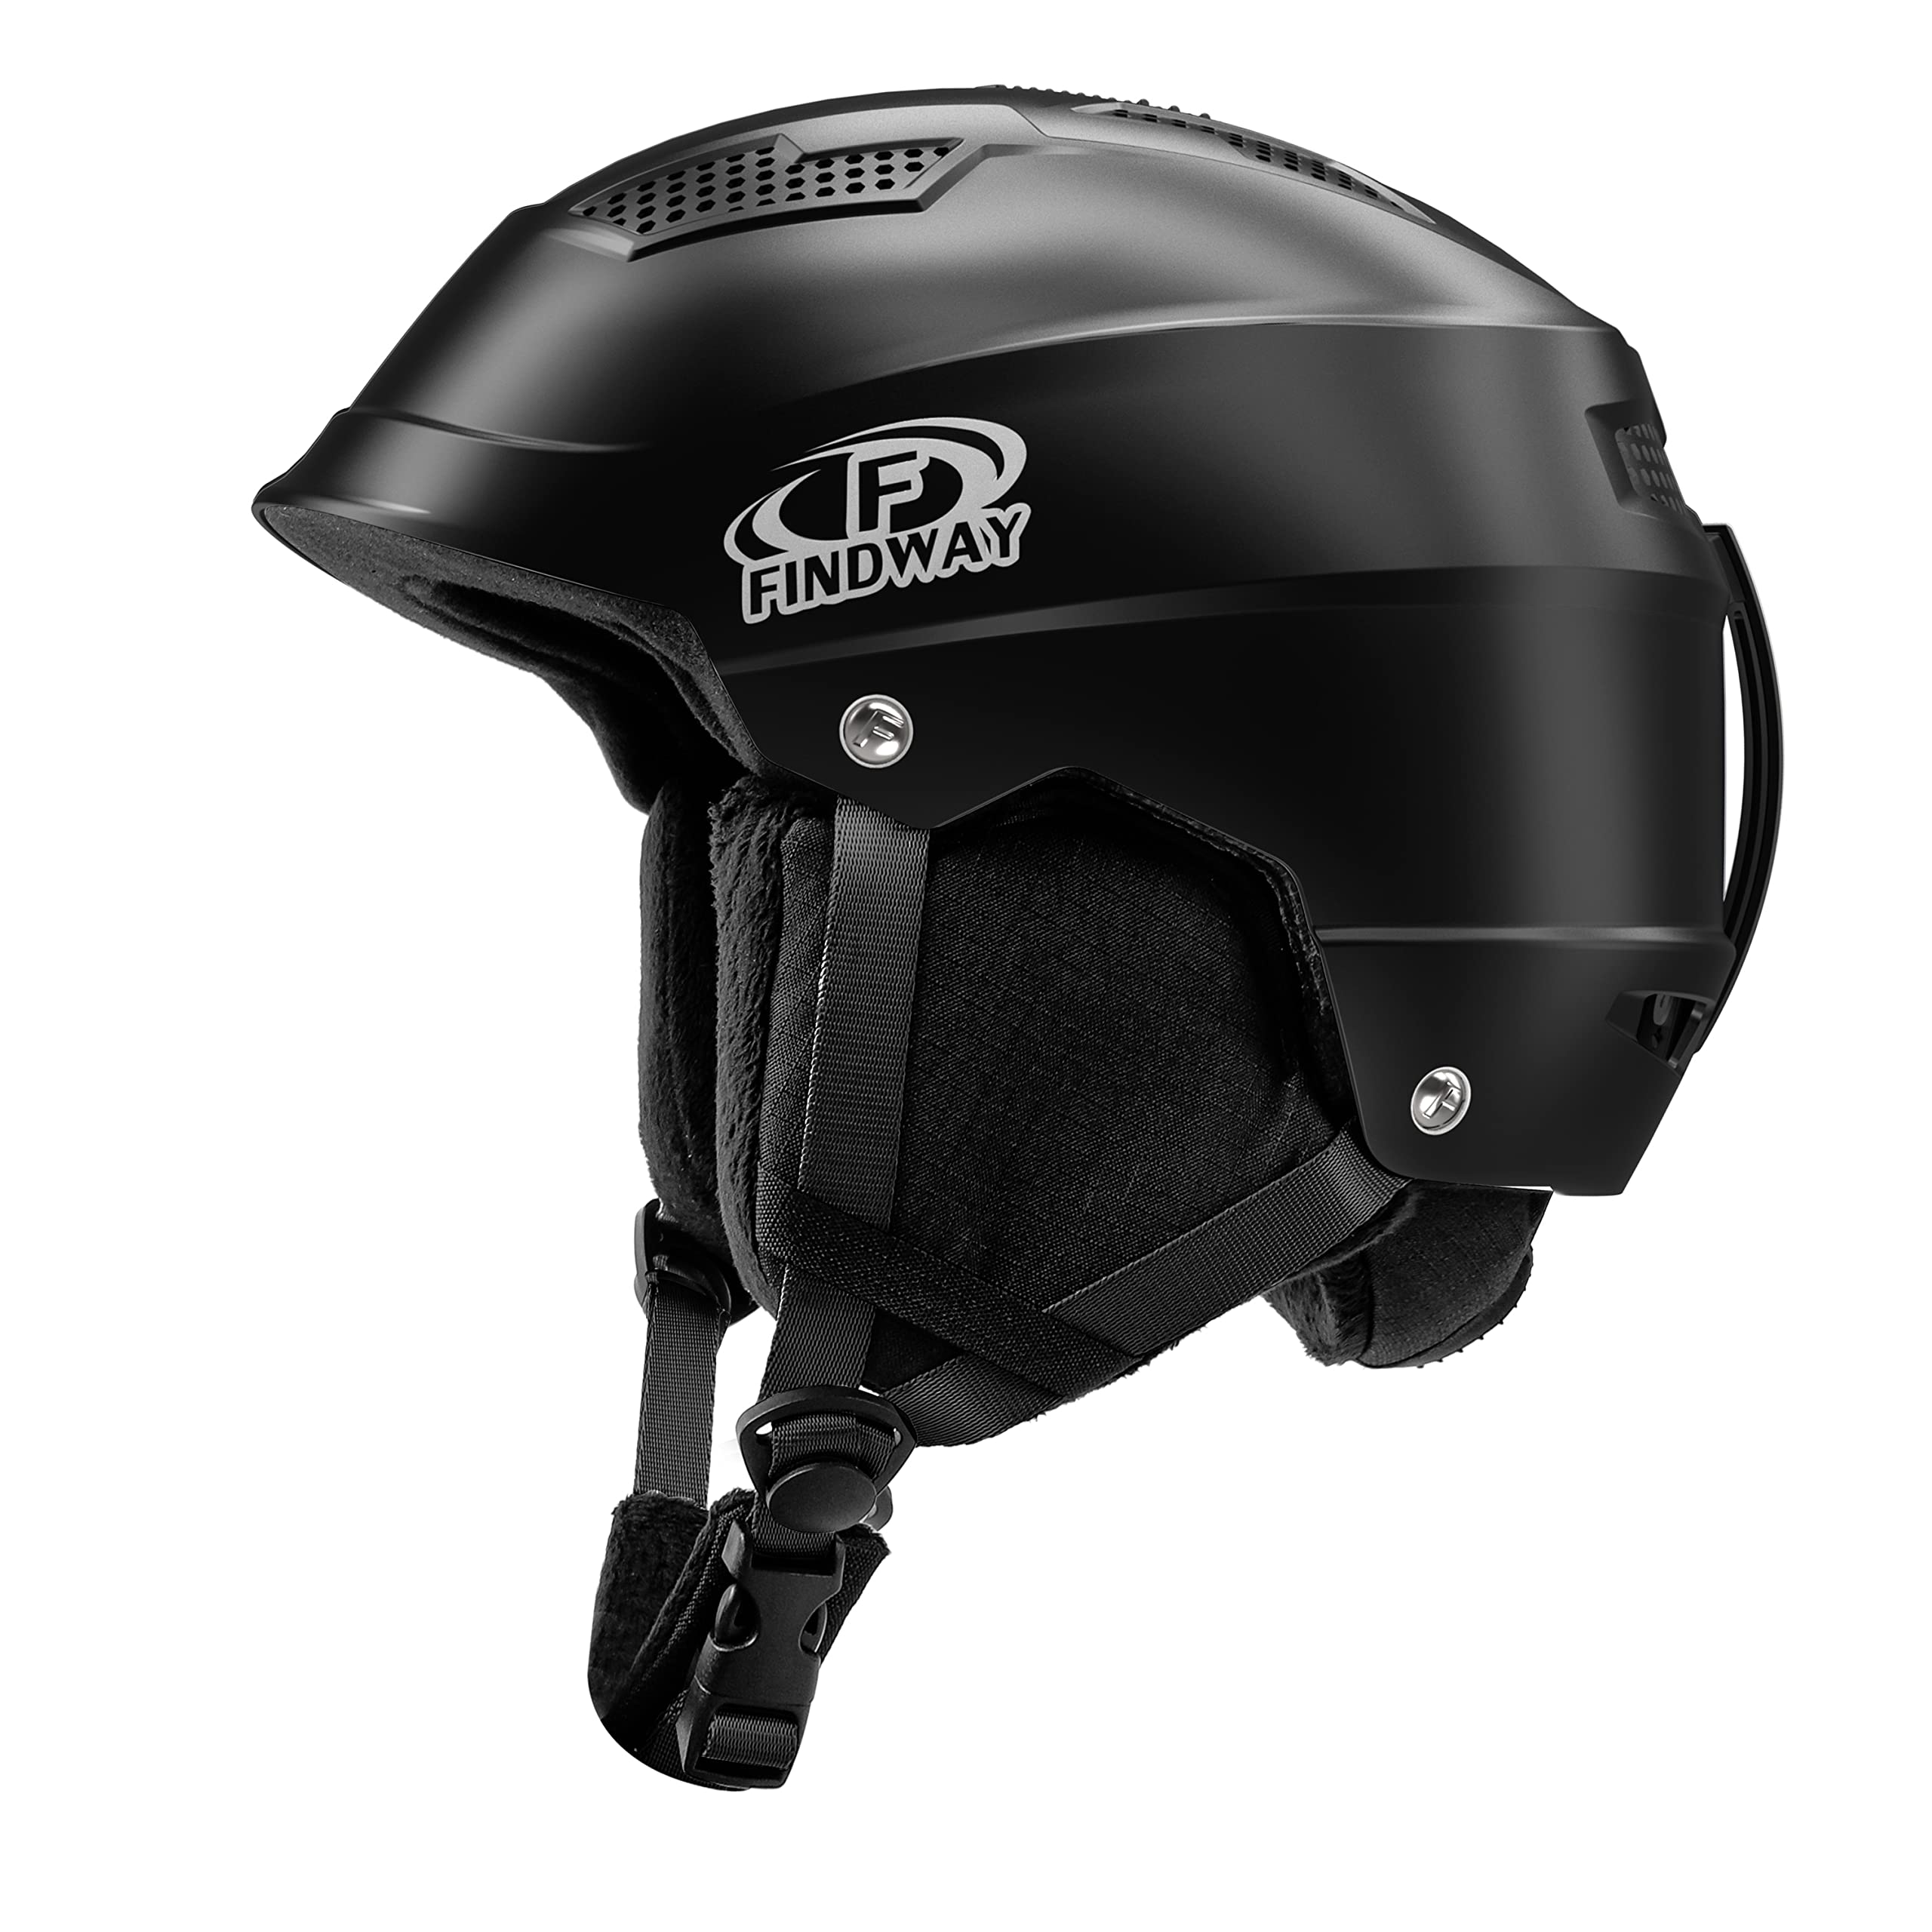 Findway スキー ヘルメット スノーボード ヘルメット 高密度EPS スノボ ヘルメット 調整可能 通気口 取..